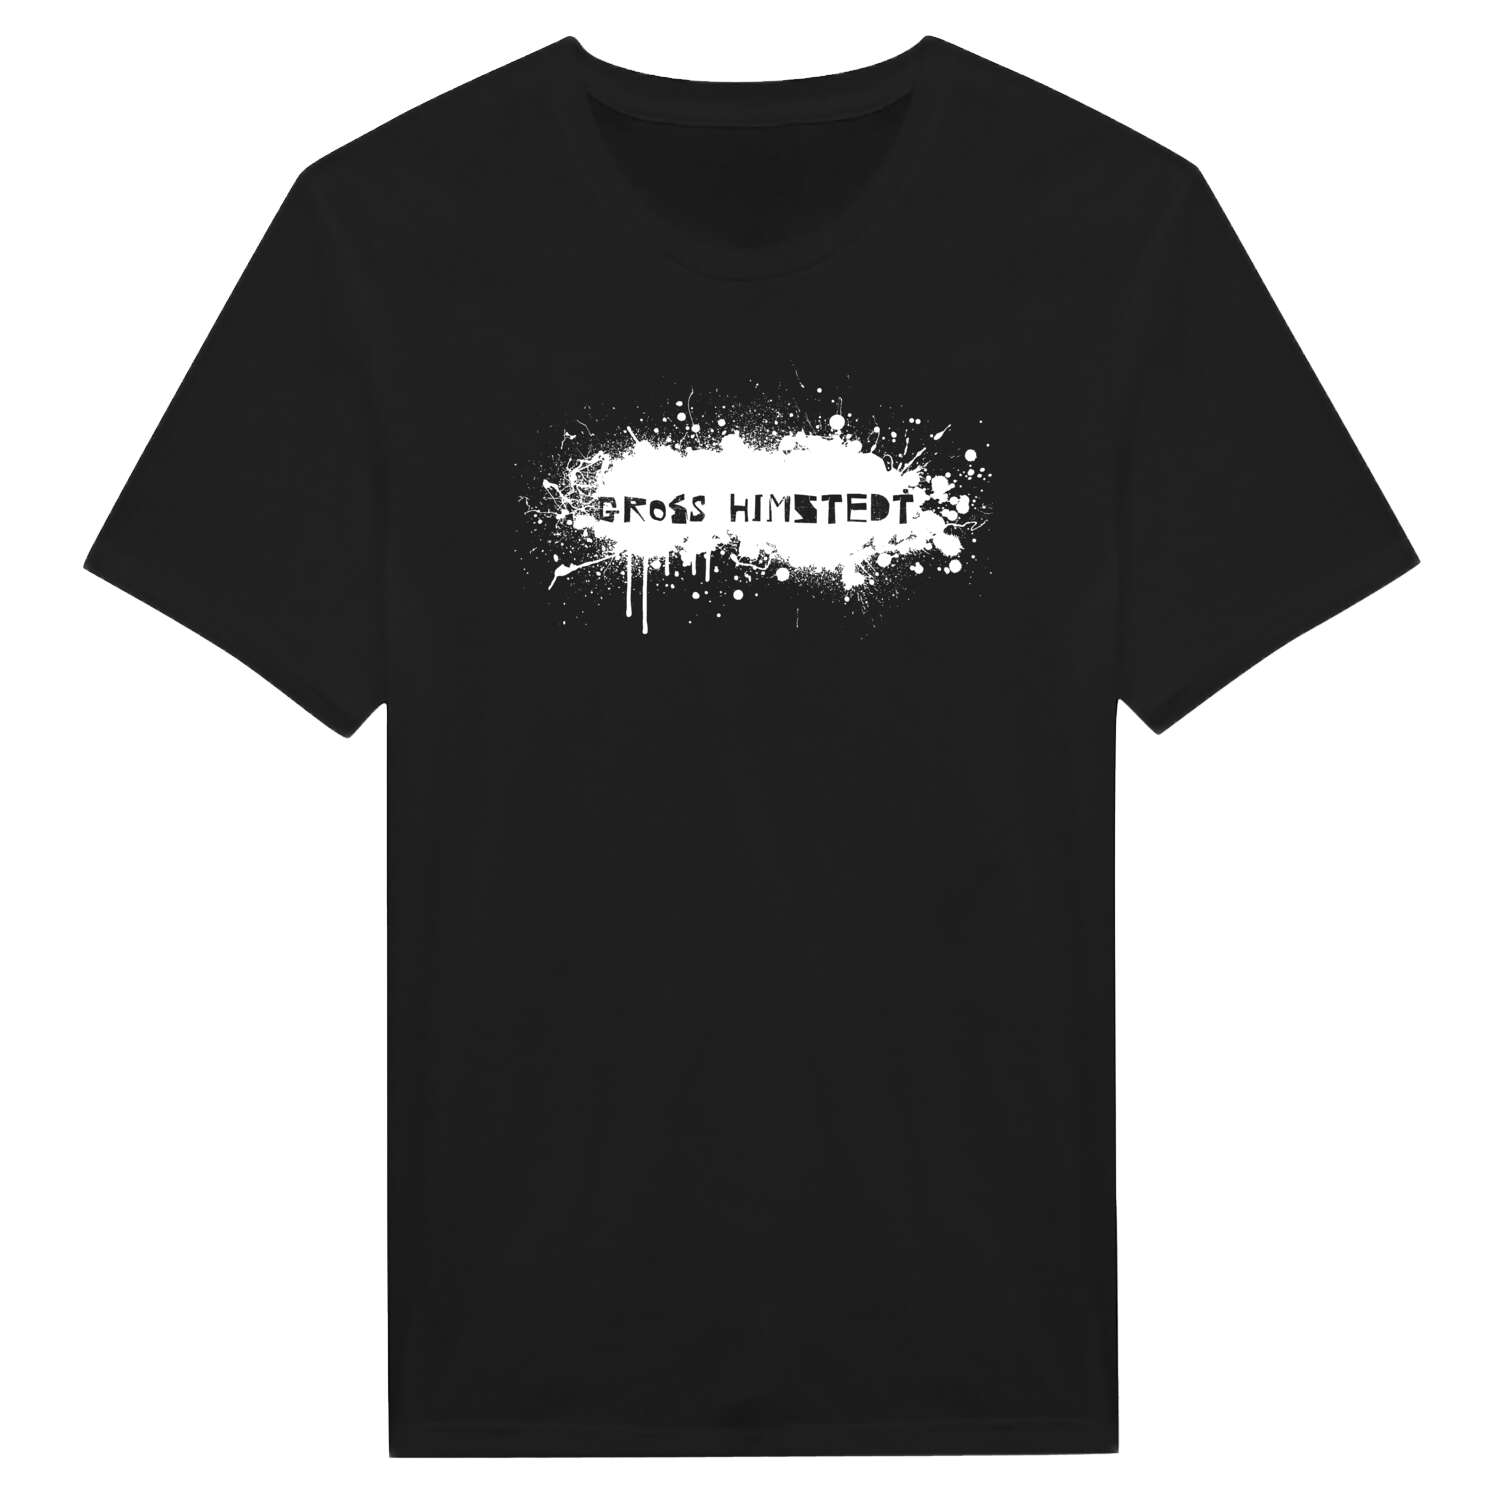 Groß Himstedt T-Shirt »Paint Splash Punk«